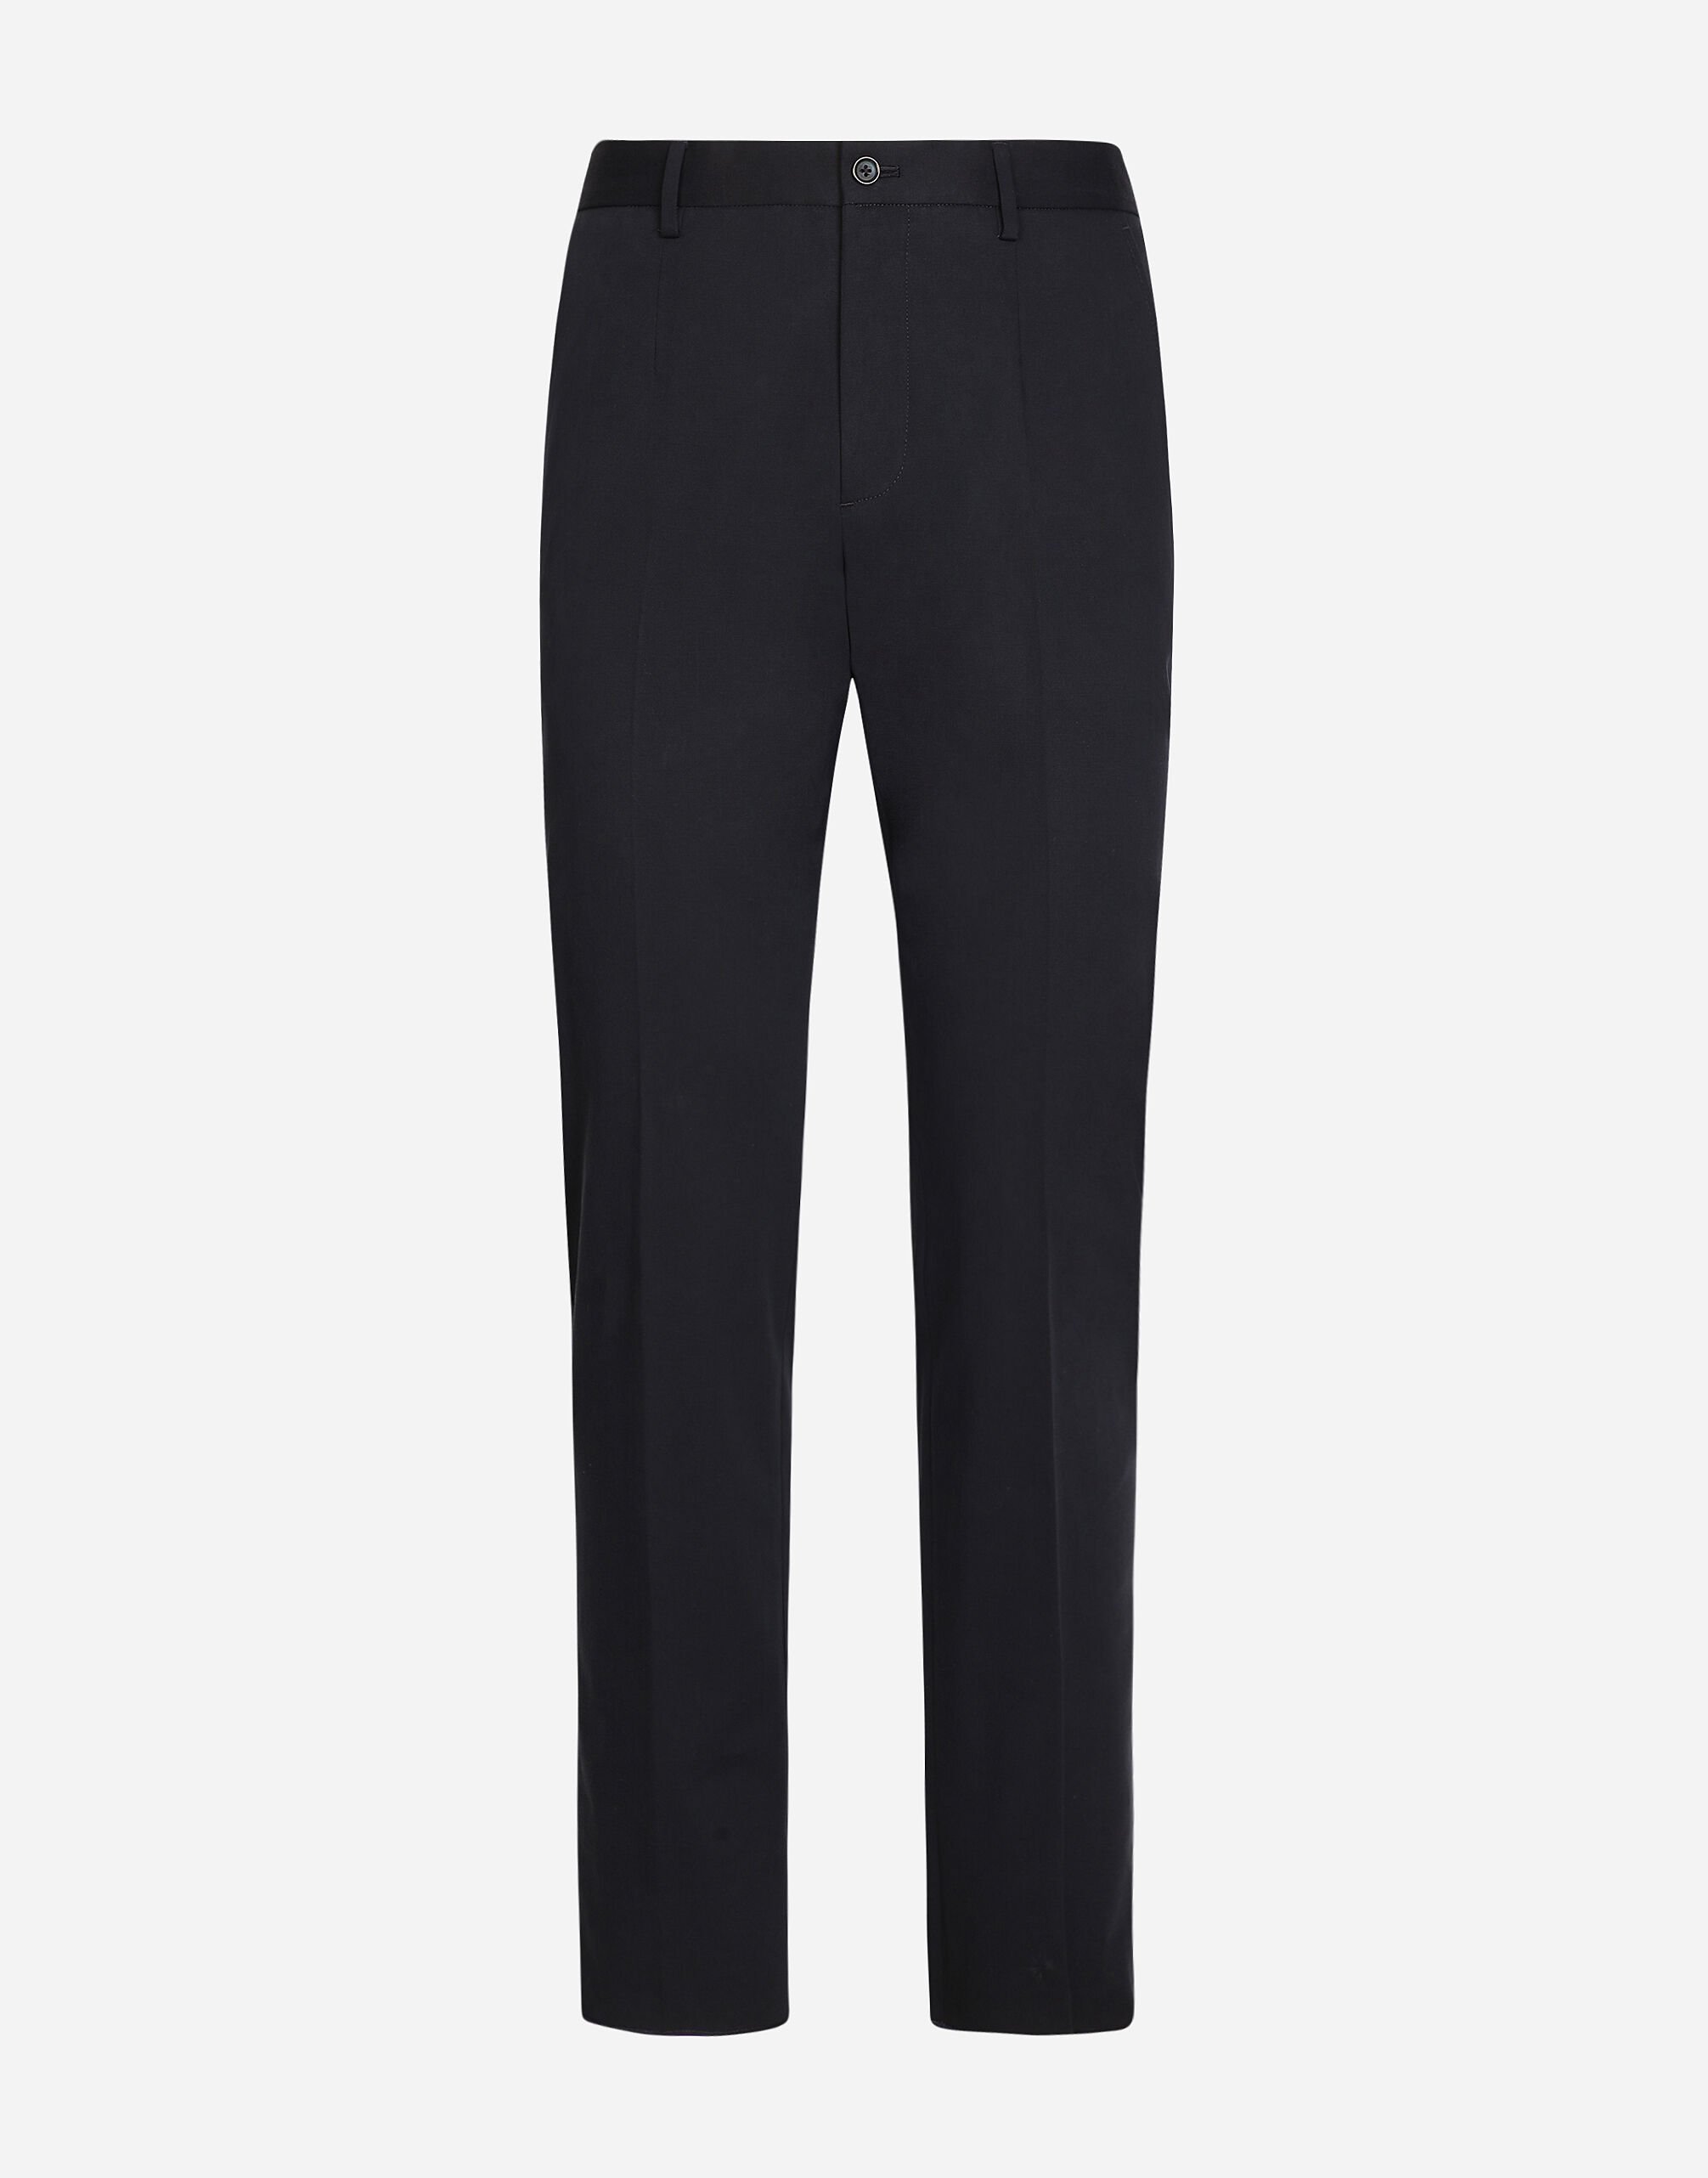 Dolce & Gabbana Stretch cotton pants with branded tag Black G2RR6TFUBGC